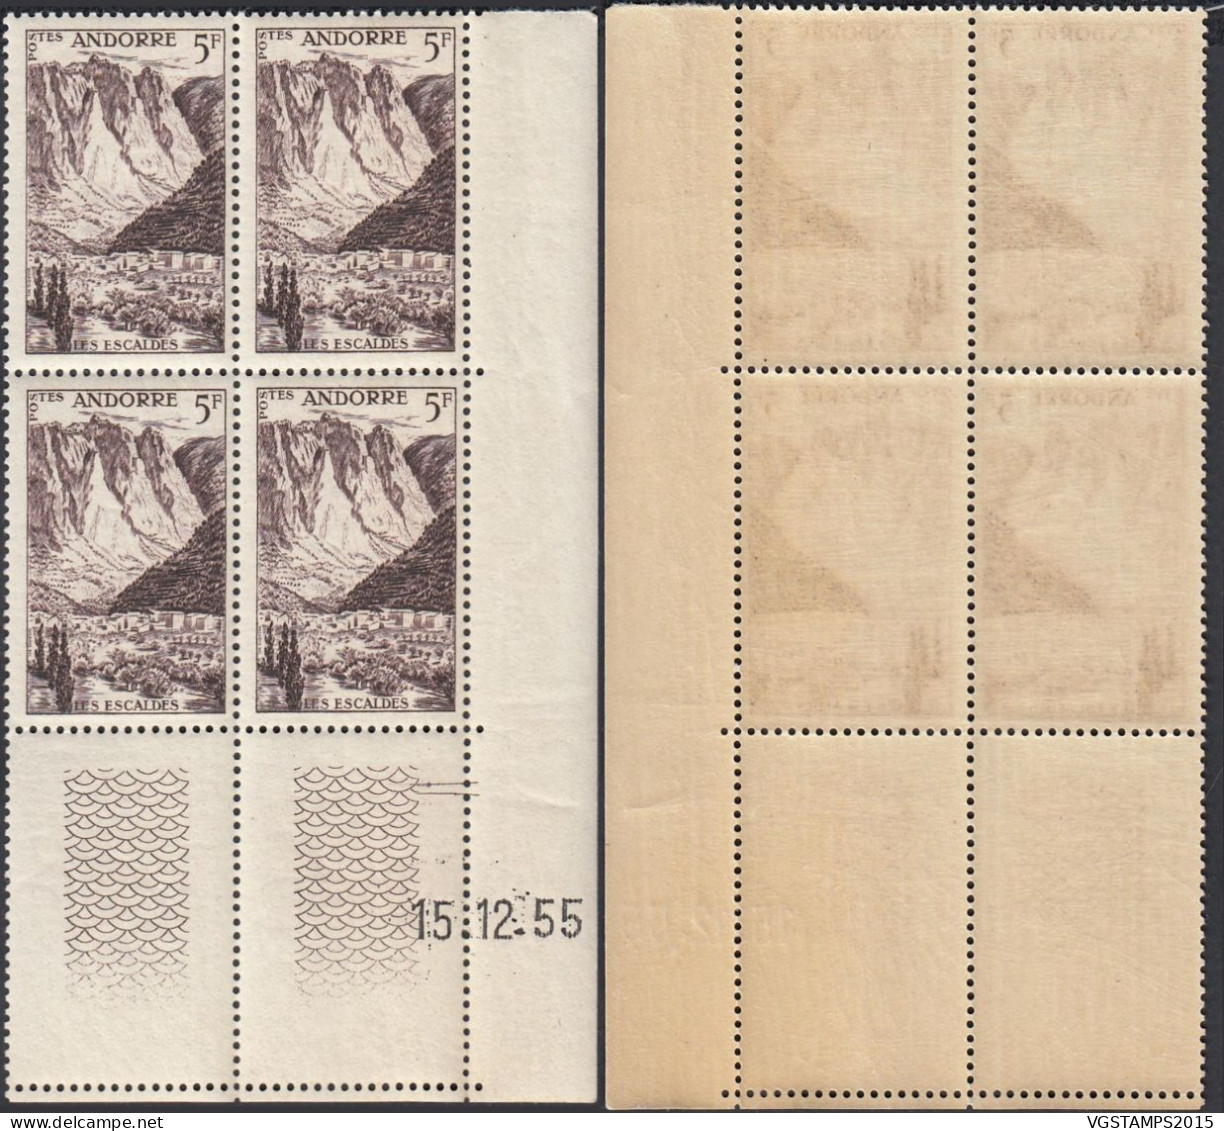 Andorre 1955 - Andorre Française - Timbres Neufs. Yvert Nr.: 141. Michel Nr.: 145. Coin Daté: 15/12/55... (EB) DC-12548 - Ungebraucht